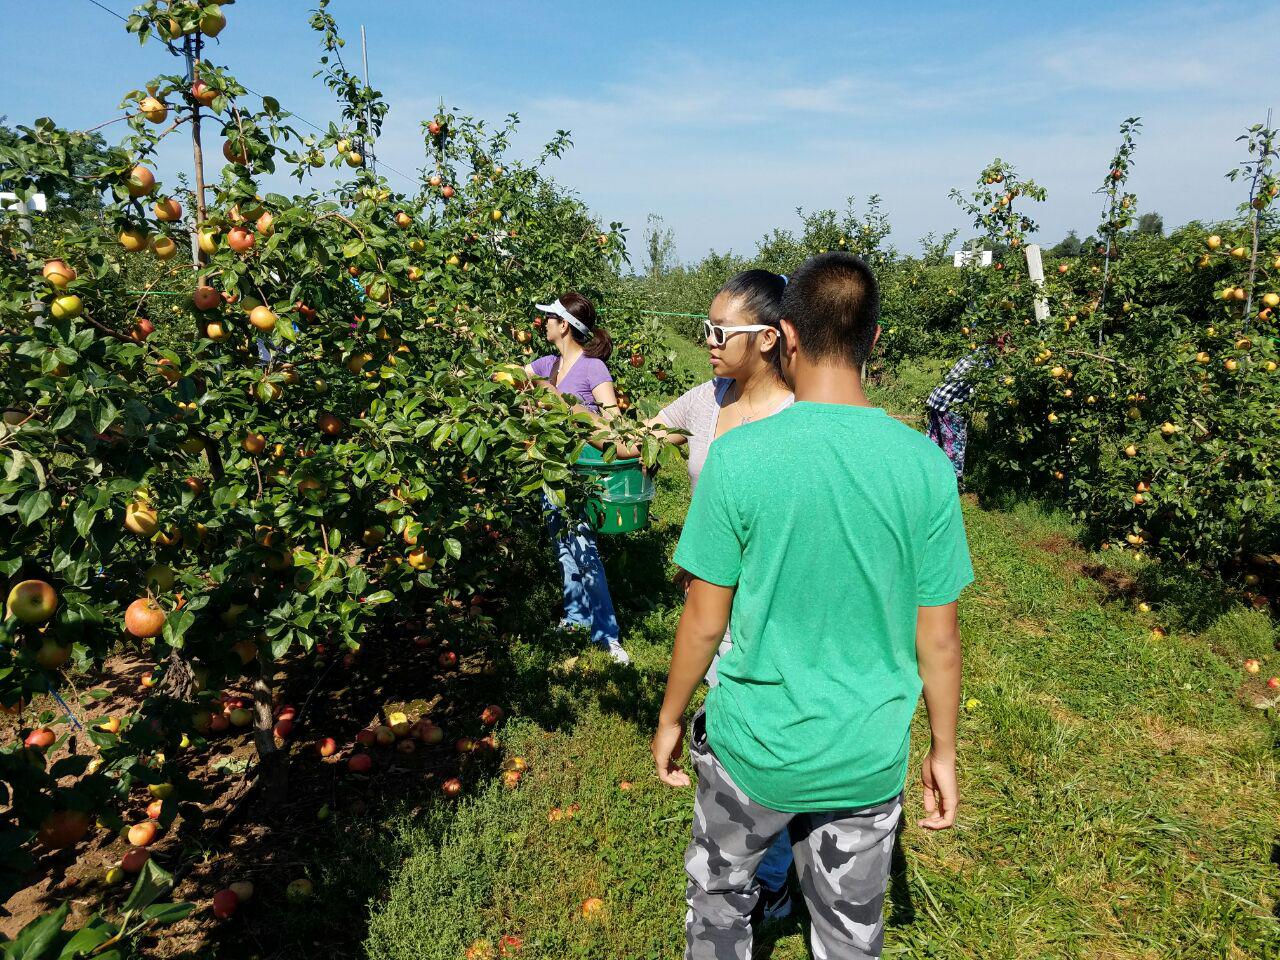 Apple pickers took advantage of the last weekend before the schoolyear began in Maryland. Photo by Geoffrey Nolasco (Eagle News Washington D.C. Bureau)